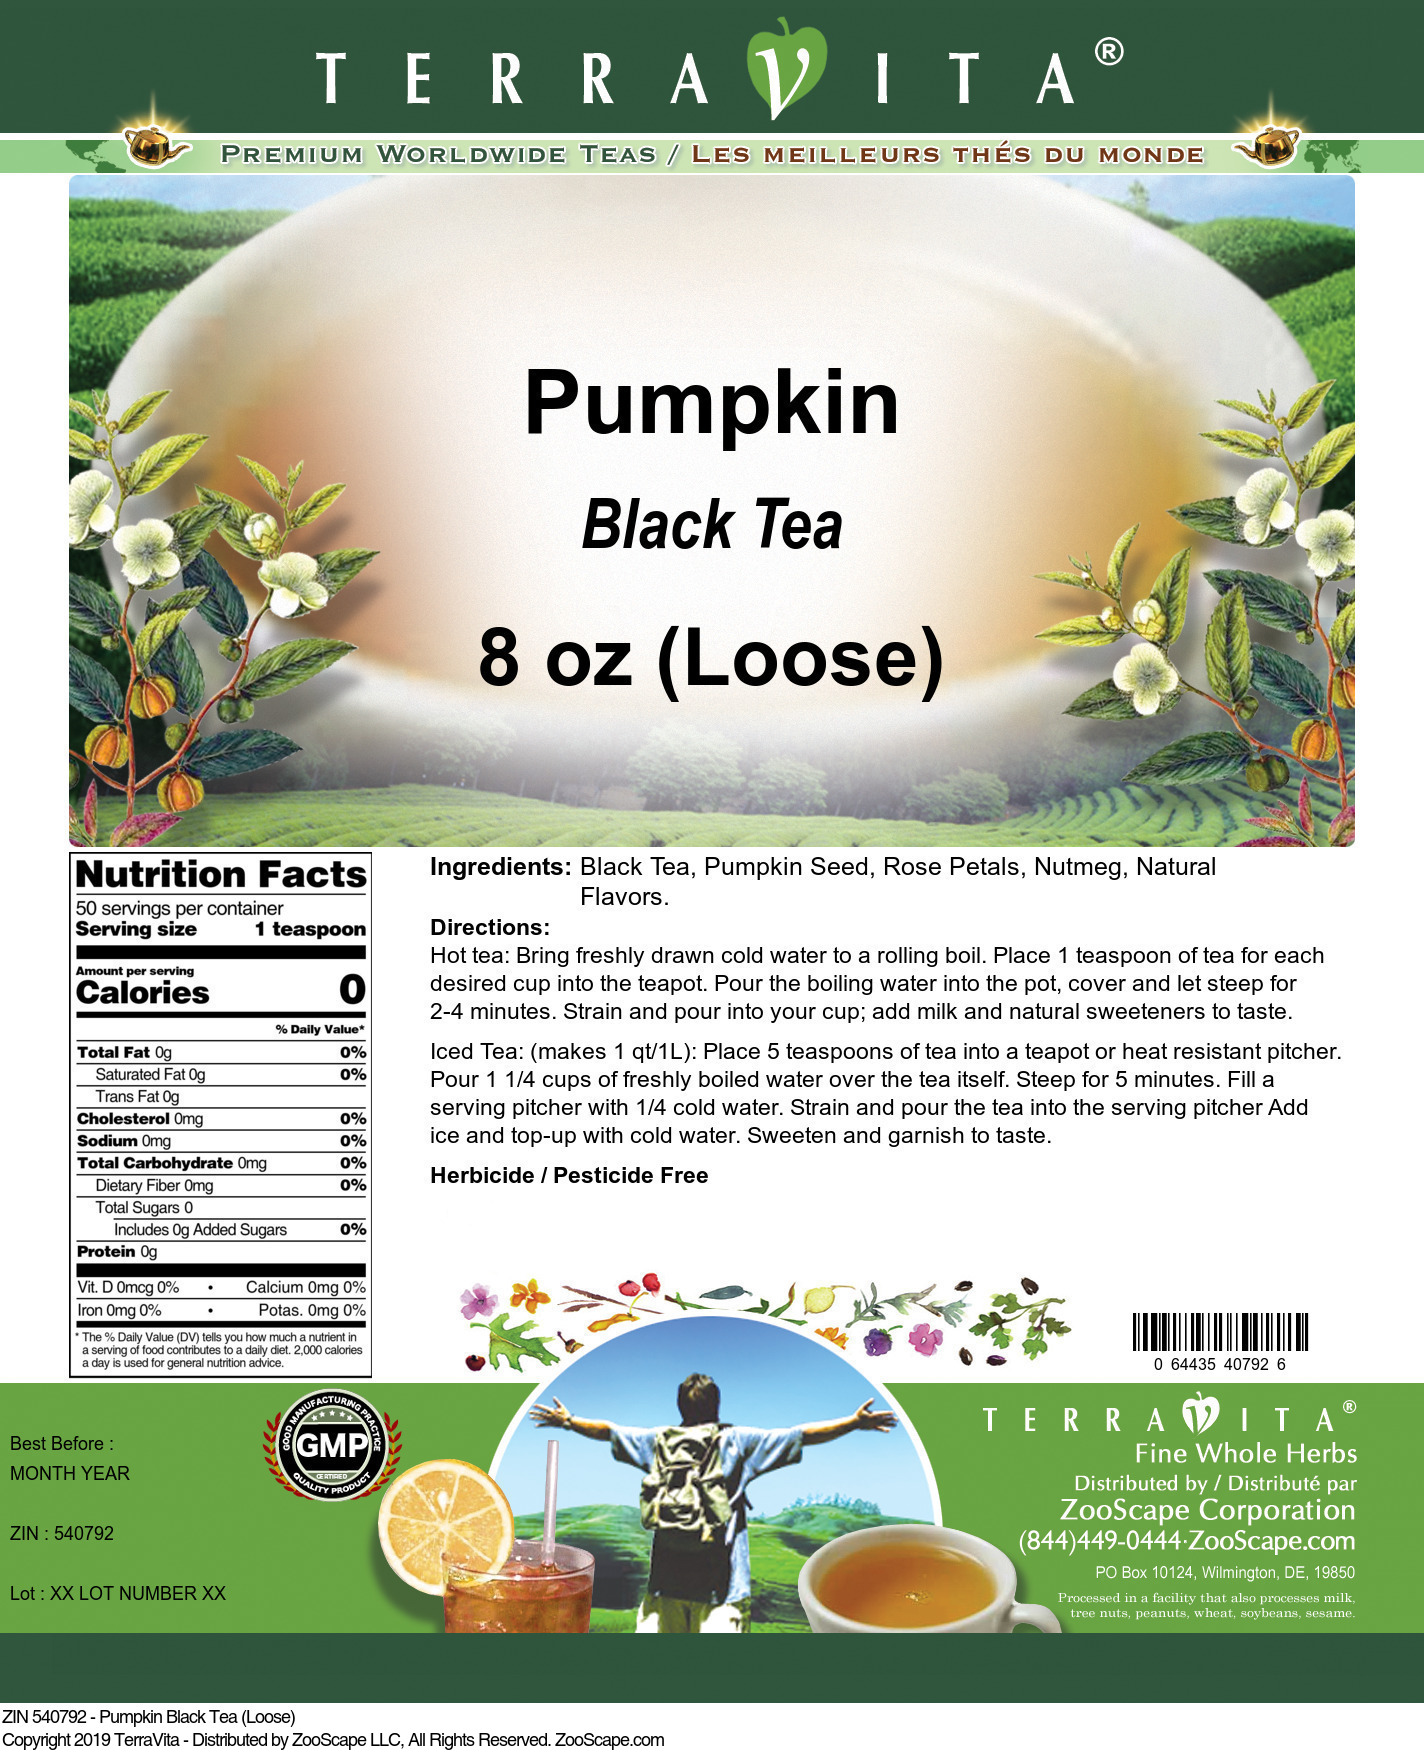 Pumpkin Black Tea (Loose) - Label